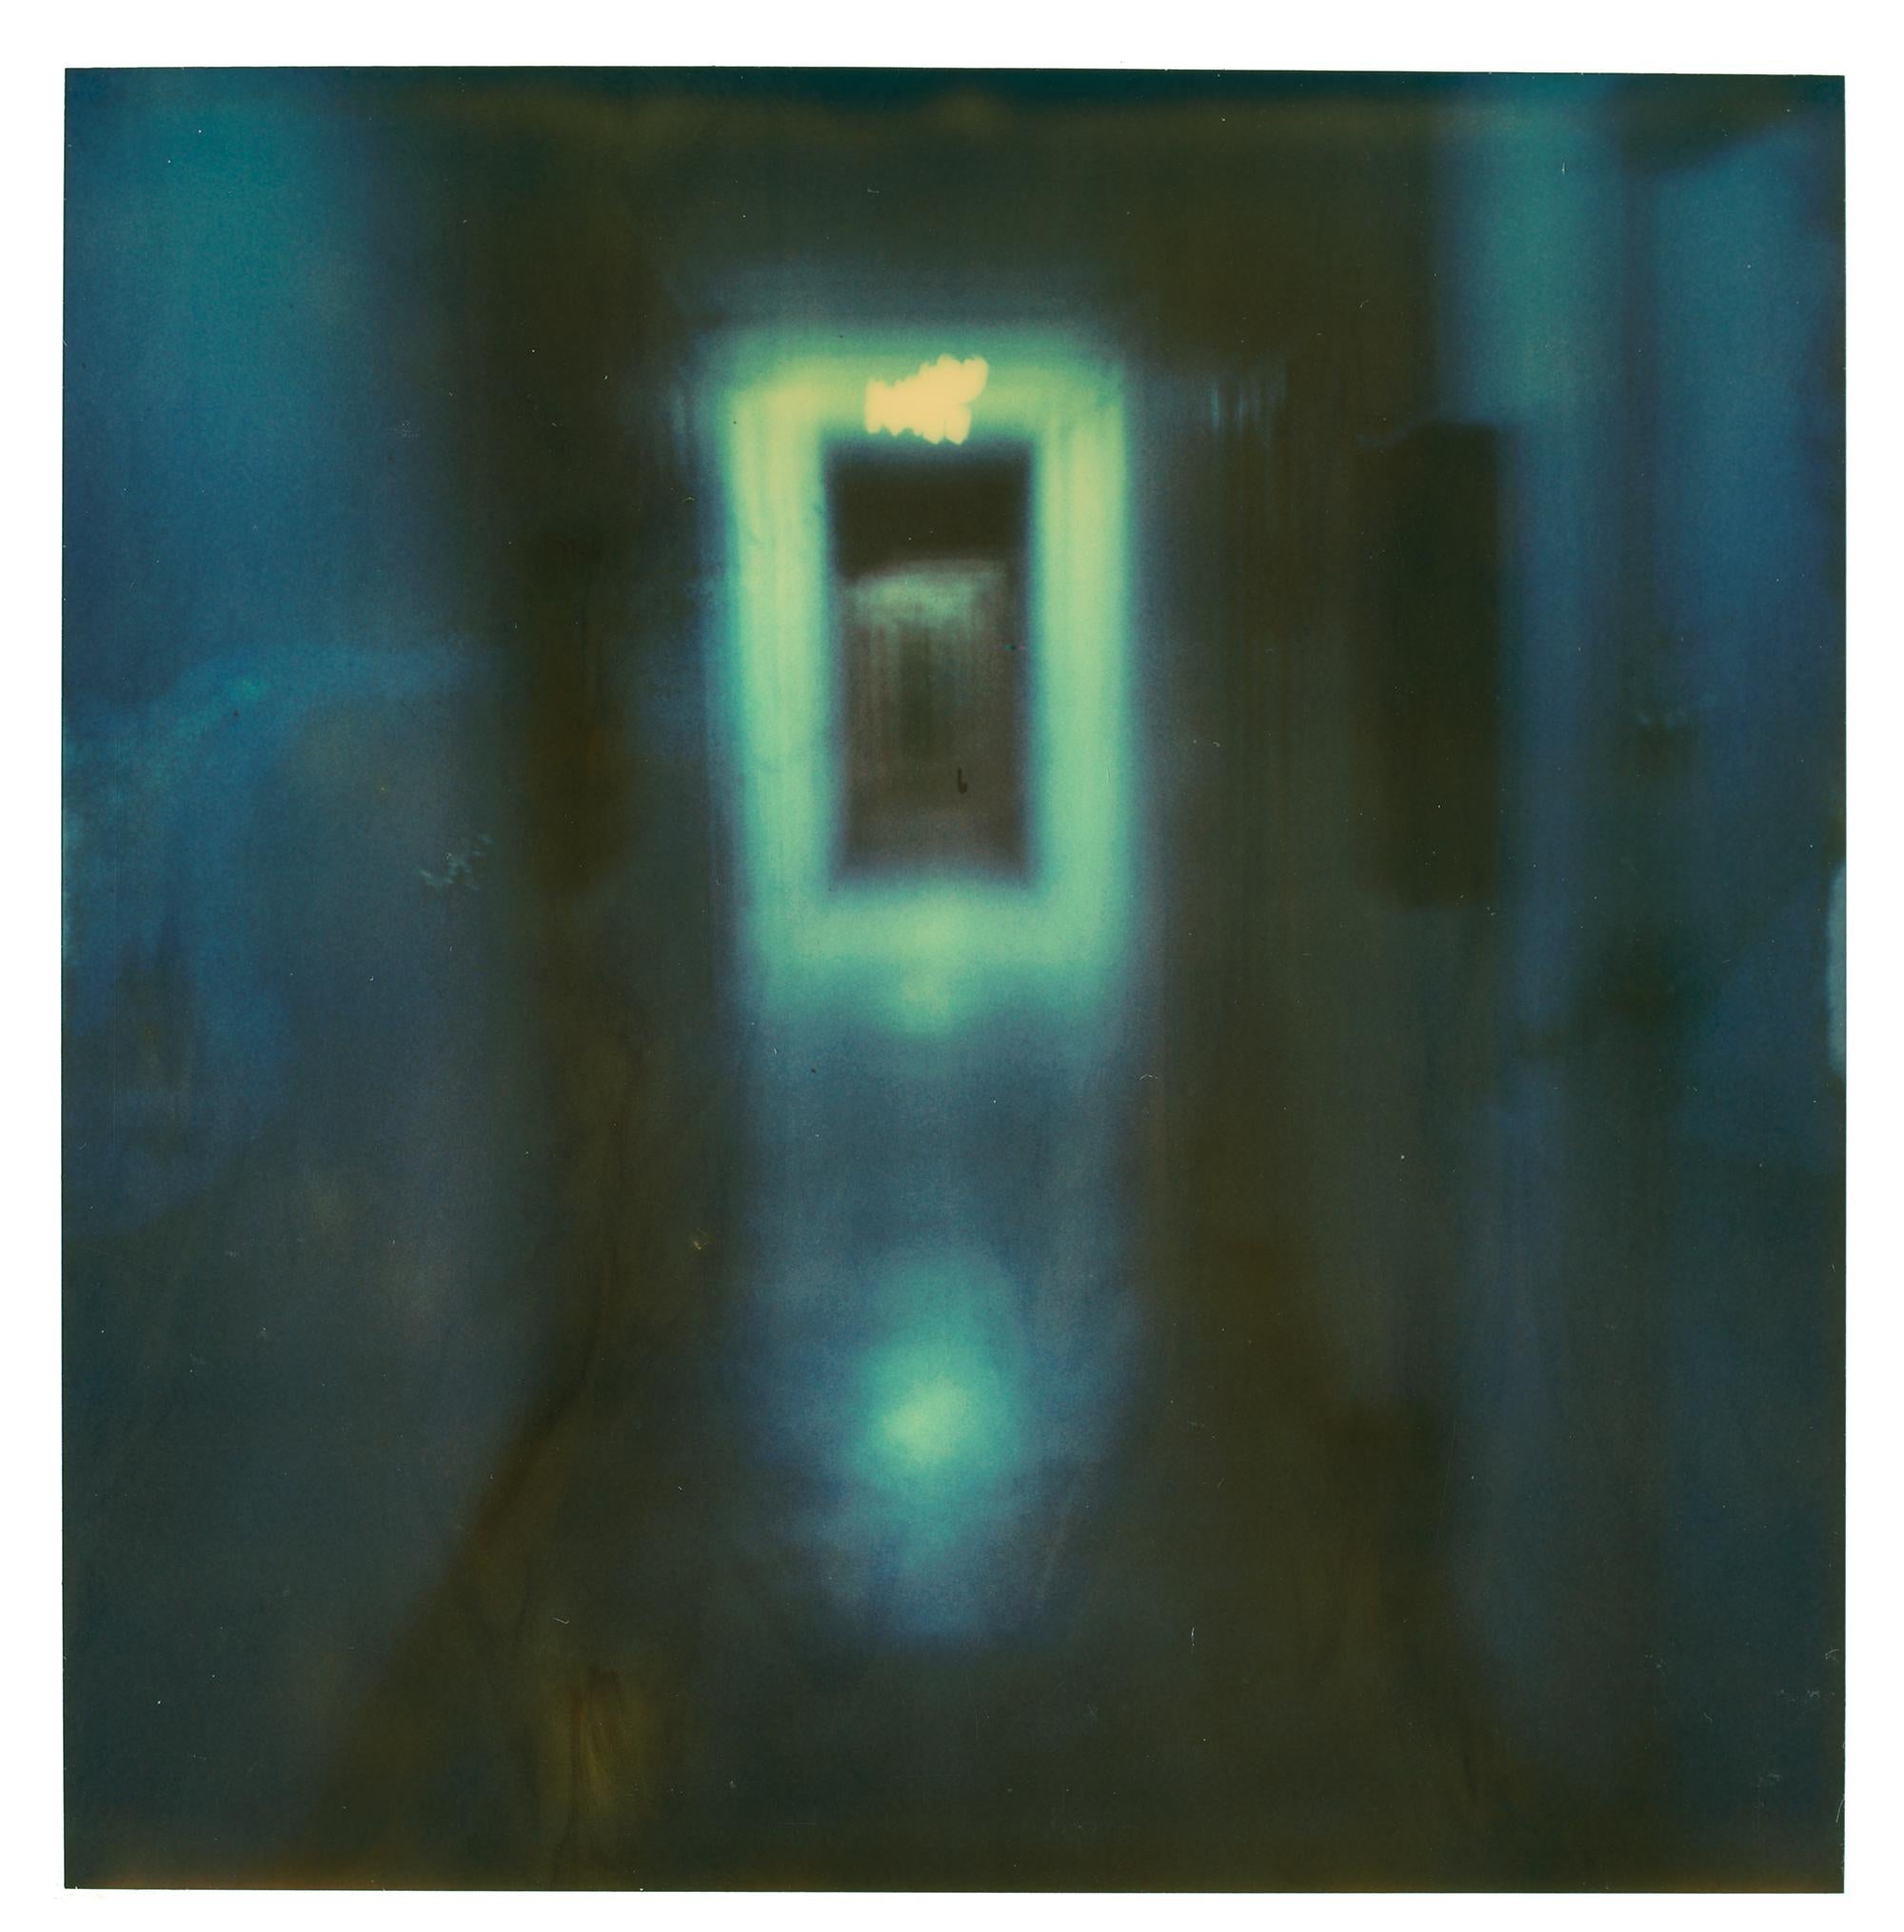 Korridor II  (Suburbia) – Zeitgenössisch, Polaroid, Analog, Porträt